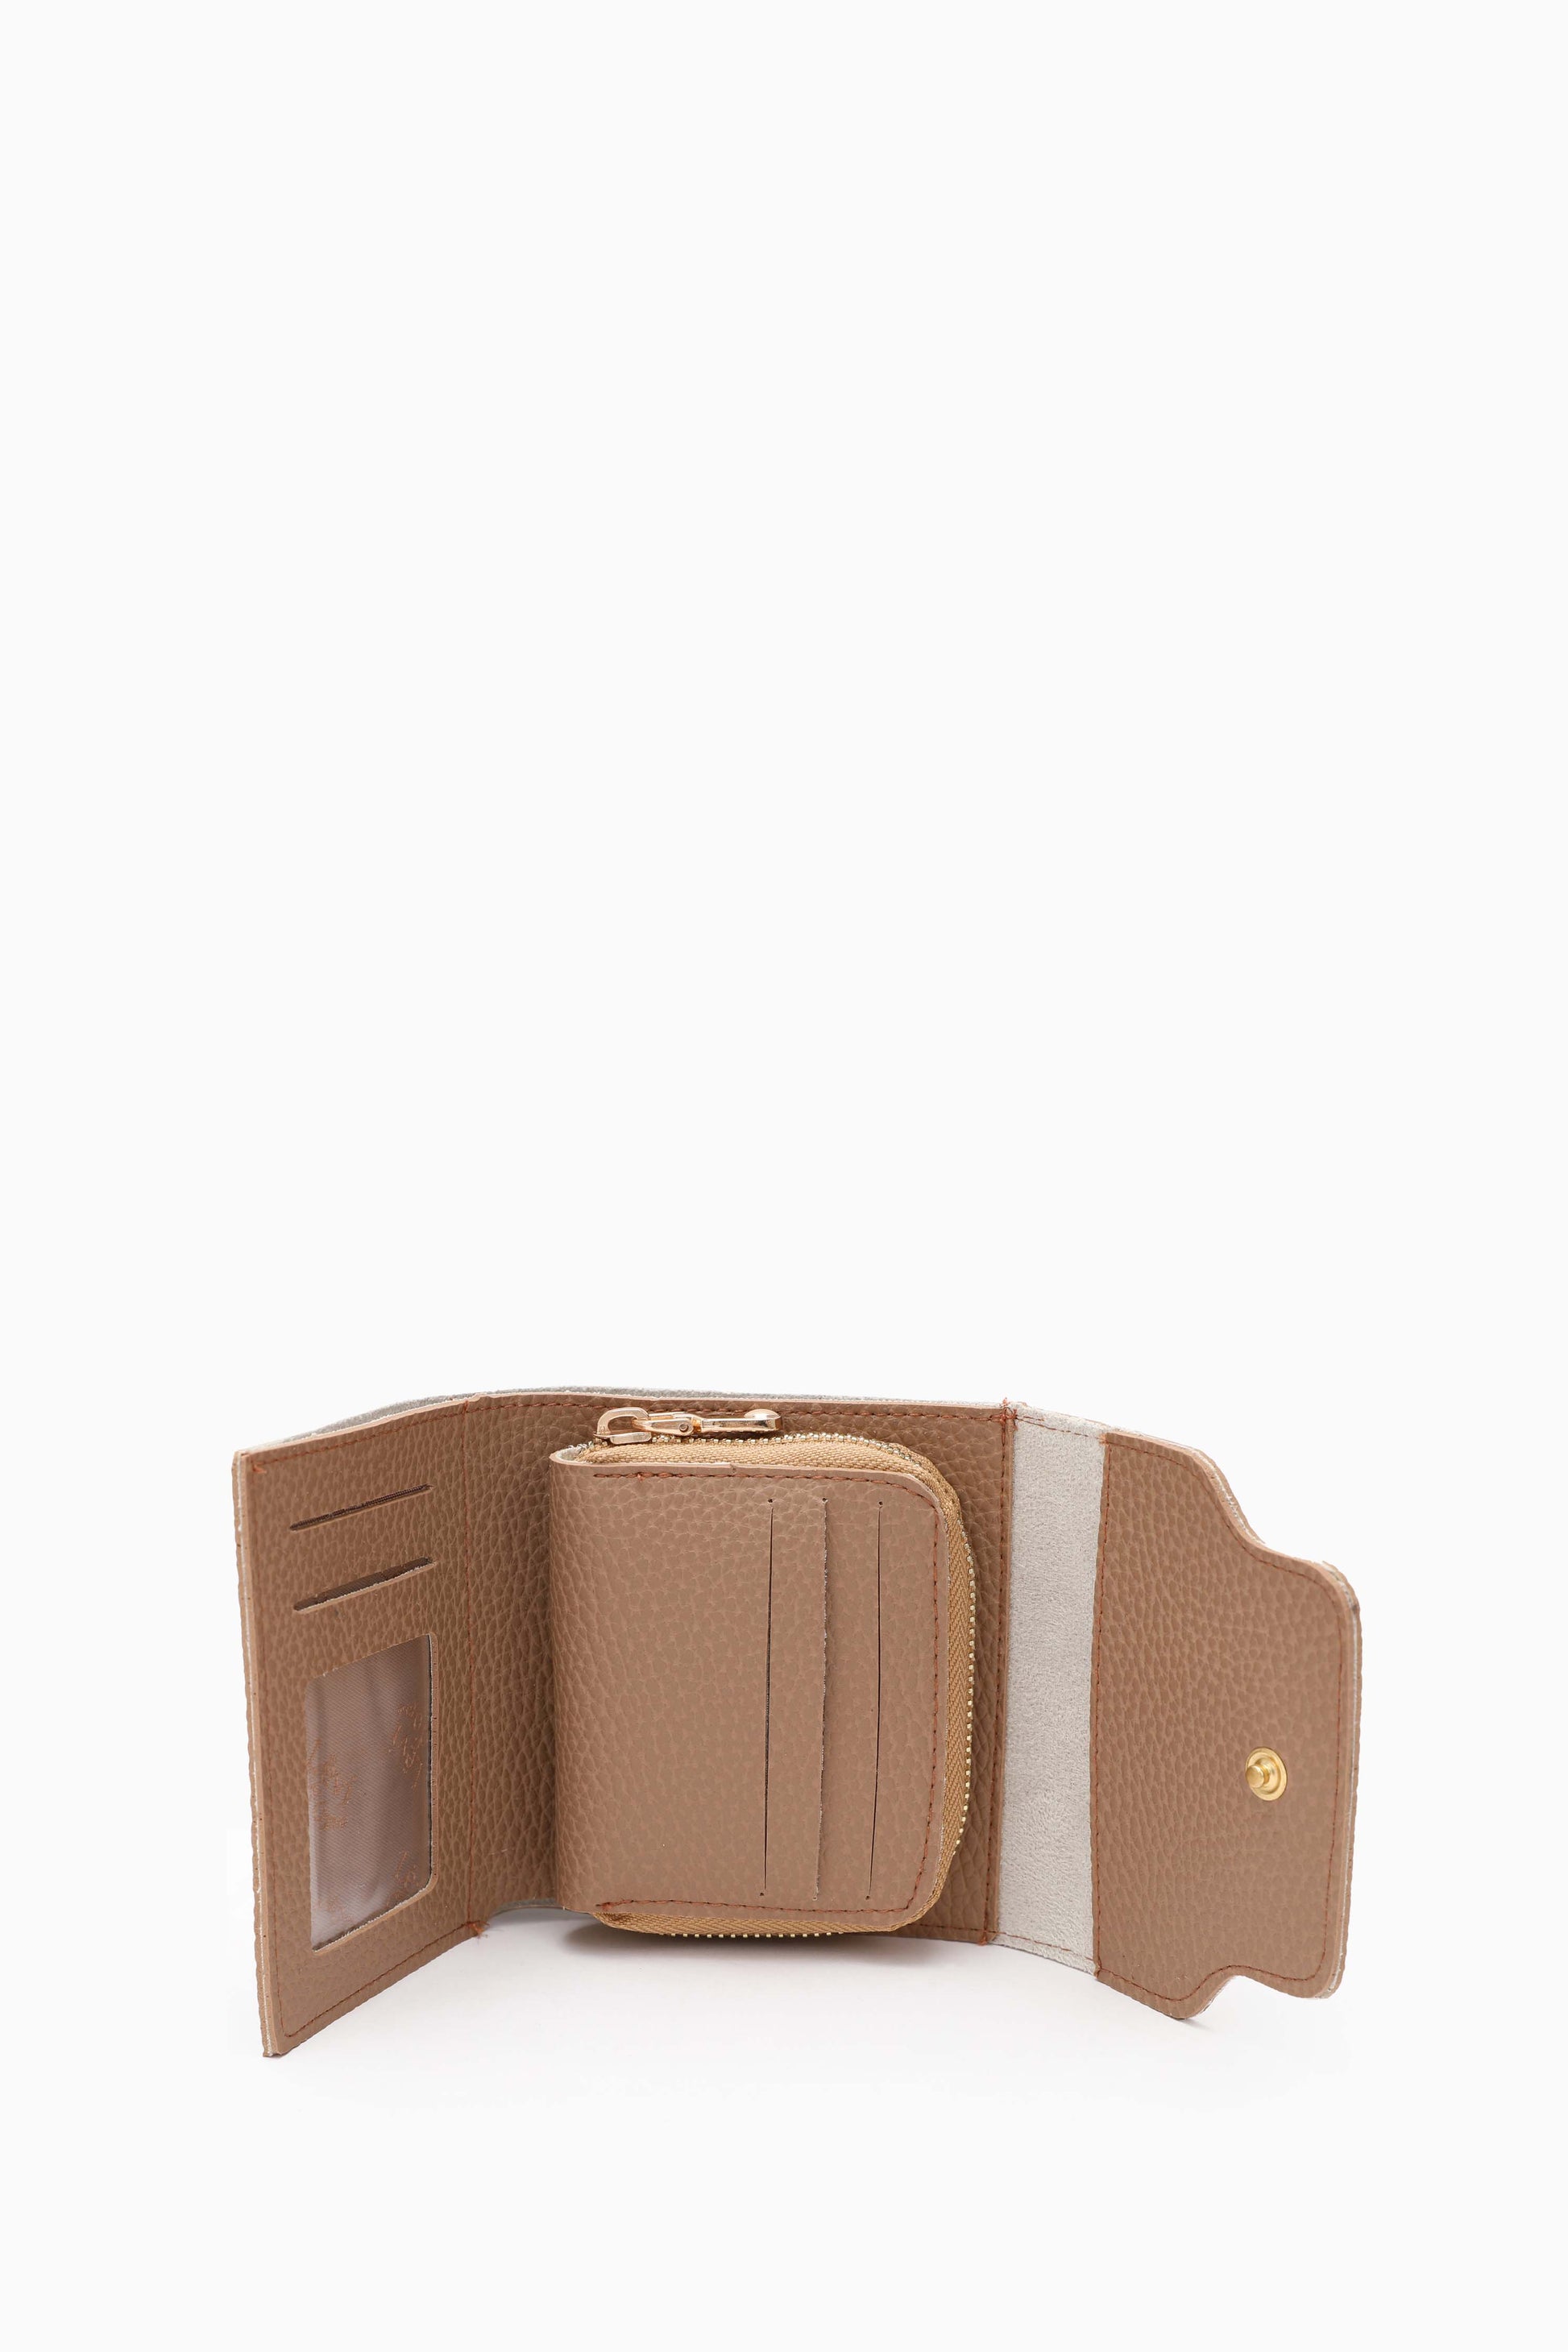 Card wallet  - 21037 -  Mid Beige - bakkaclothing